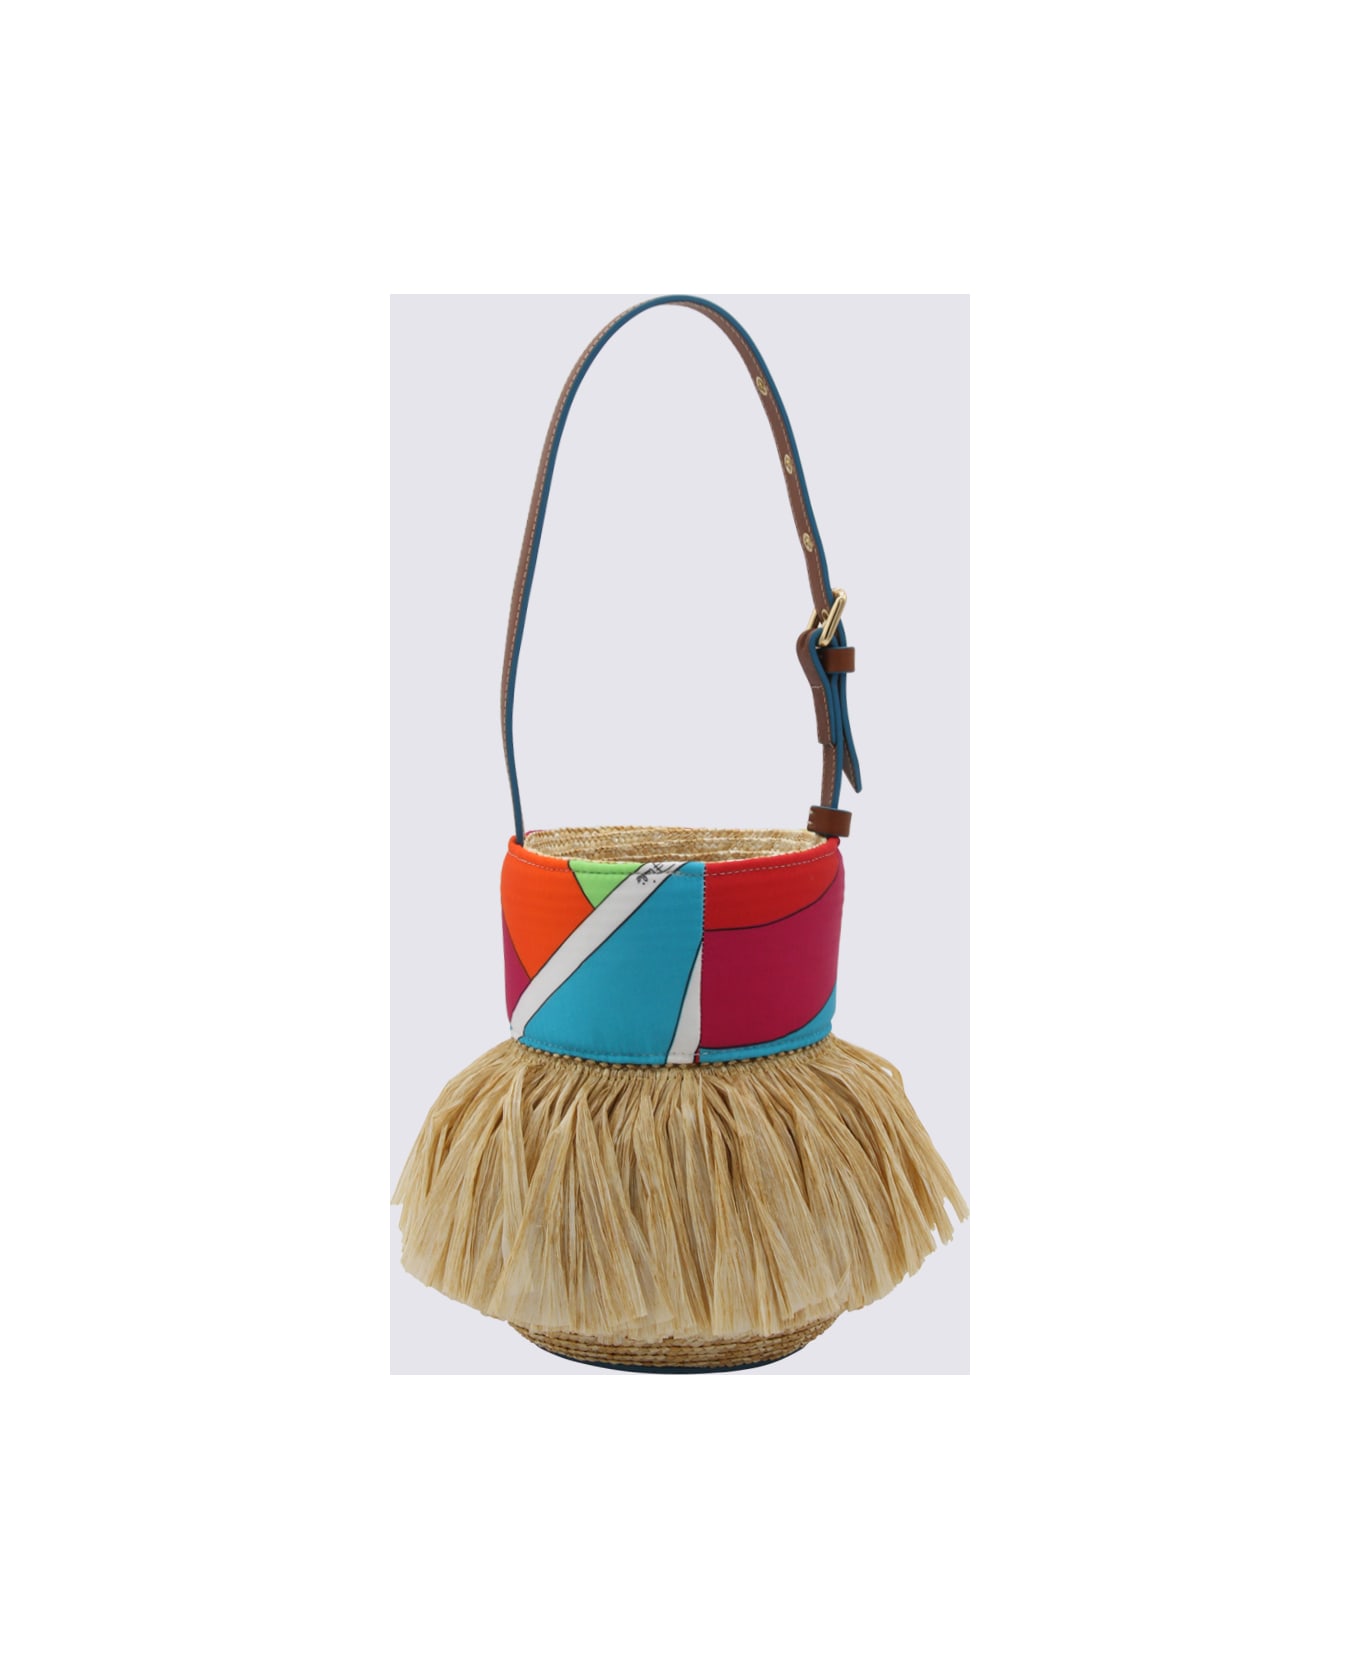 Pucci Multicolor Puccinella Bag - NATURAL+ARANCIO/FUXI